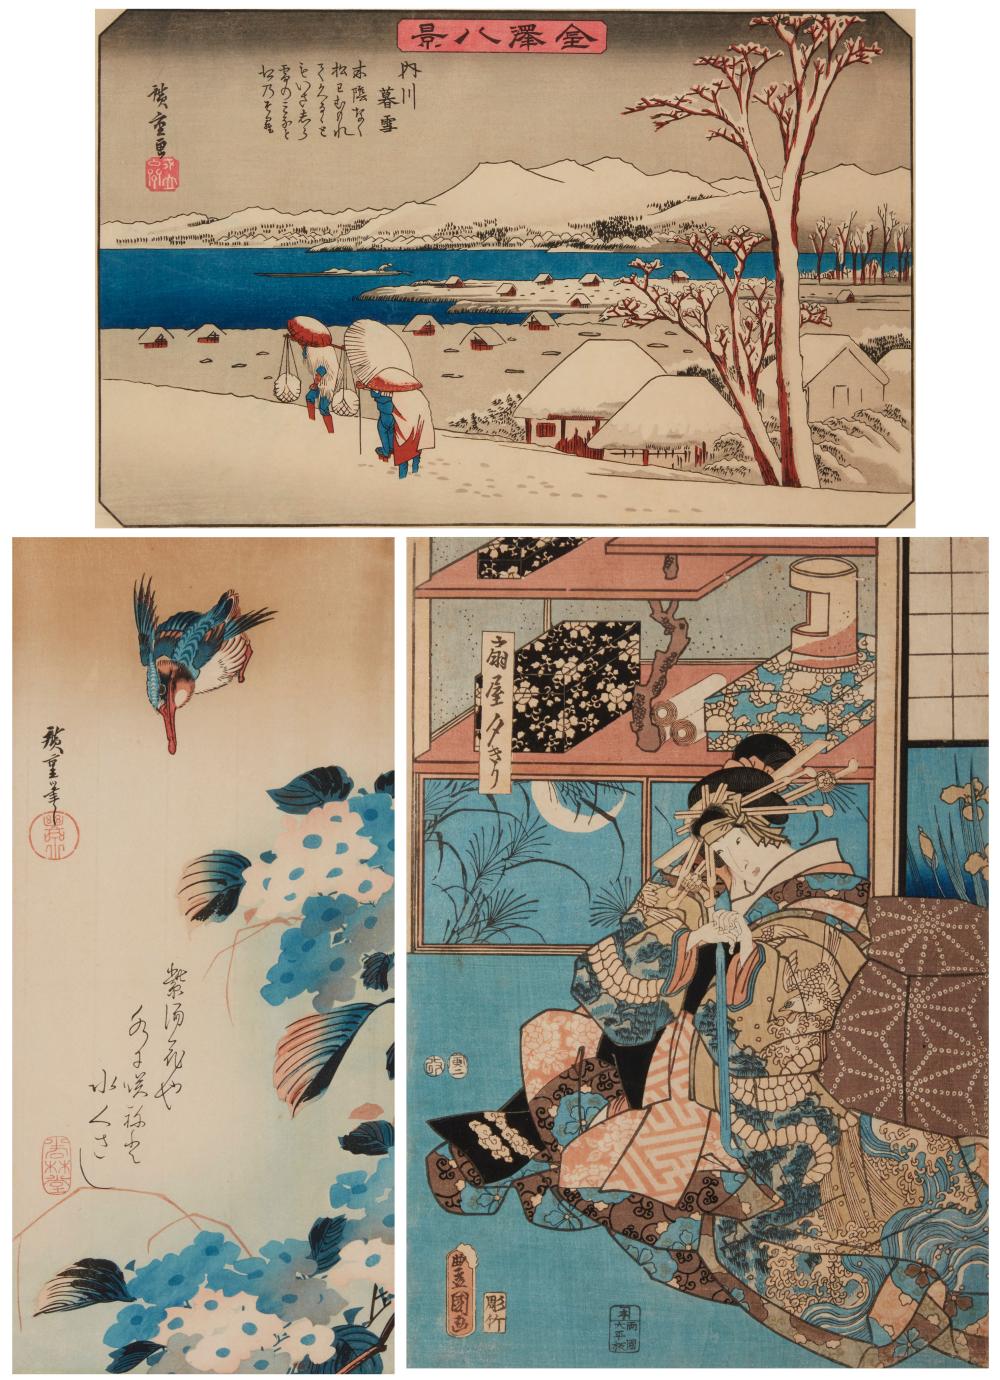 ANDO (UTAGAWA) HIROSHIGE (1797-1858)